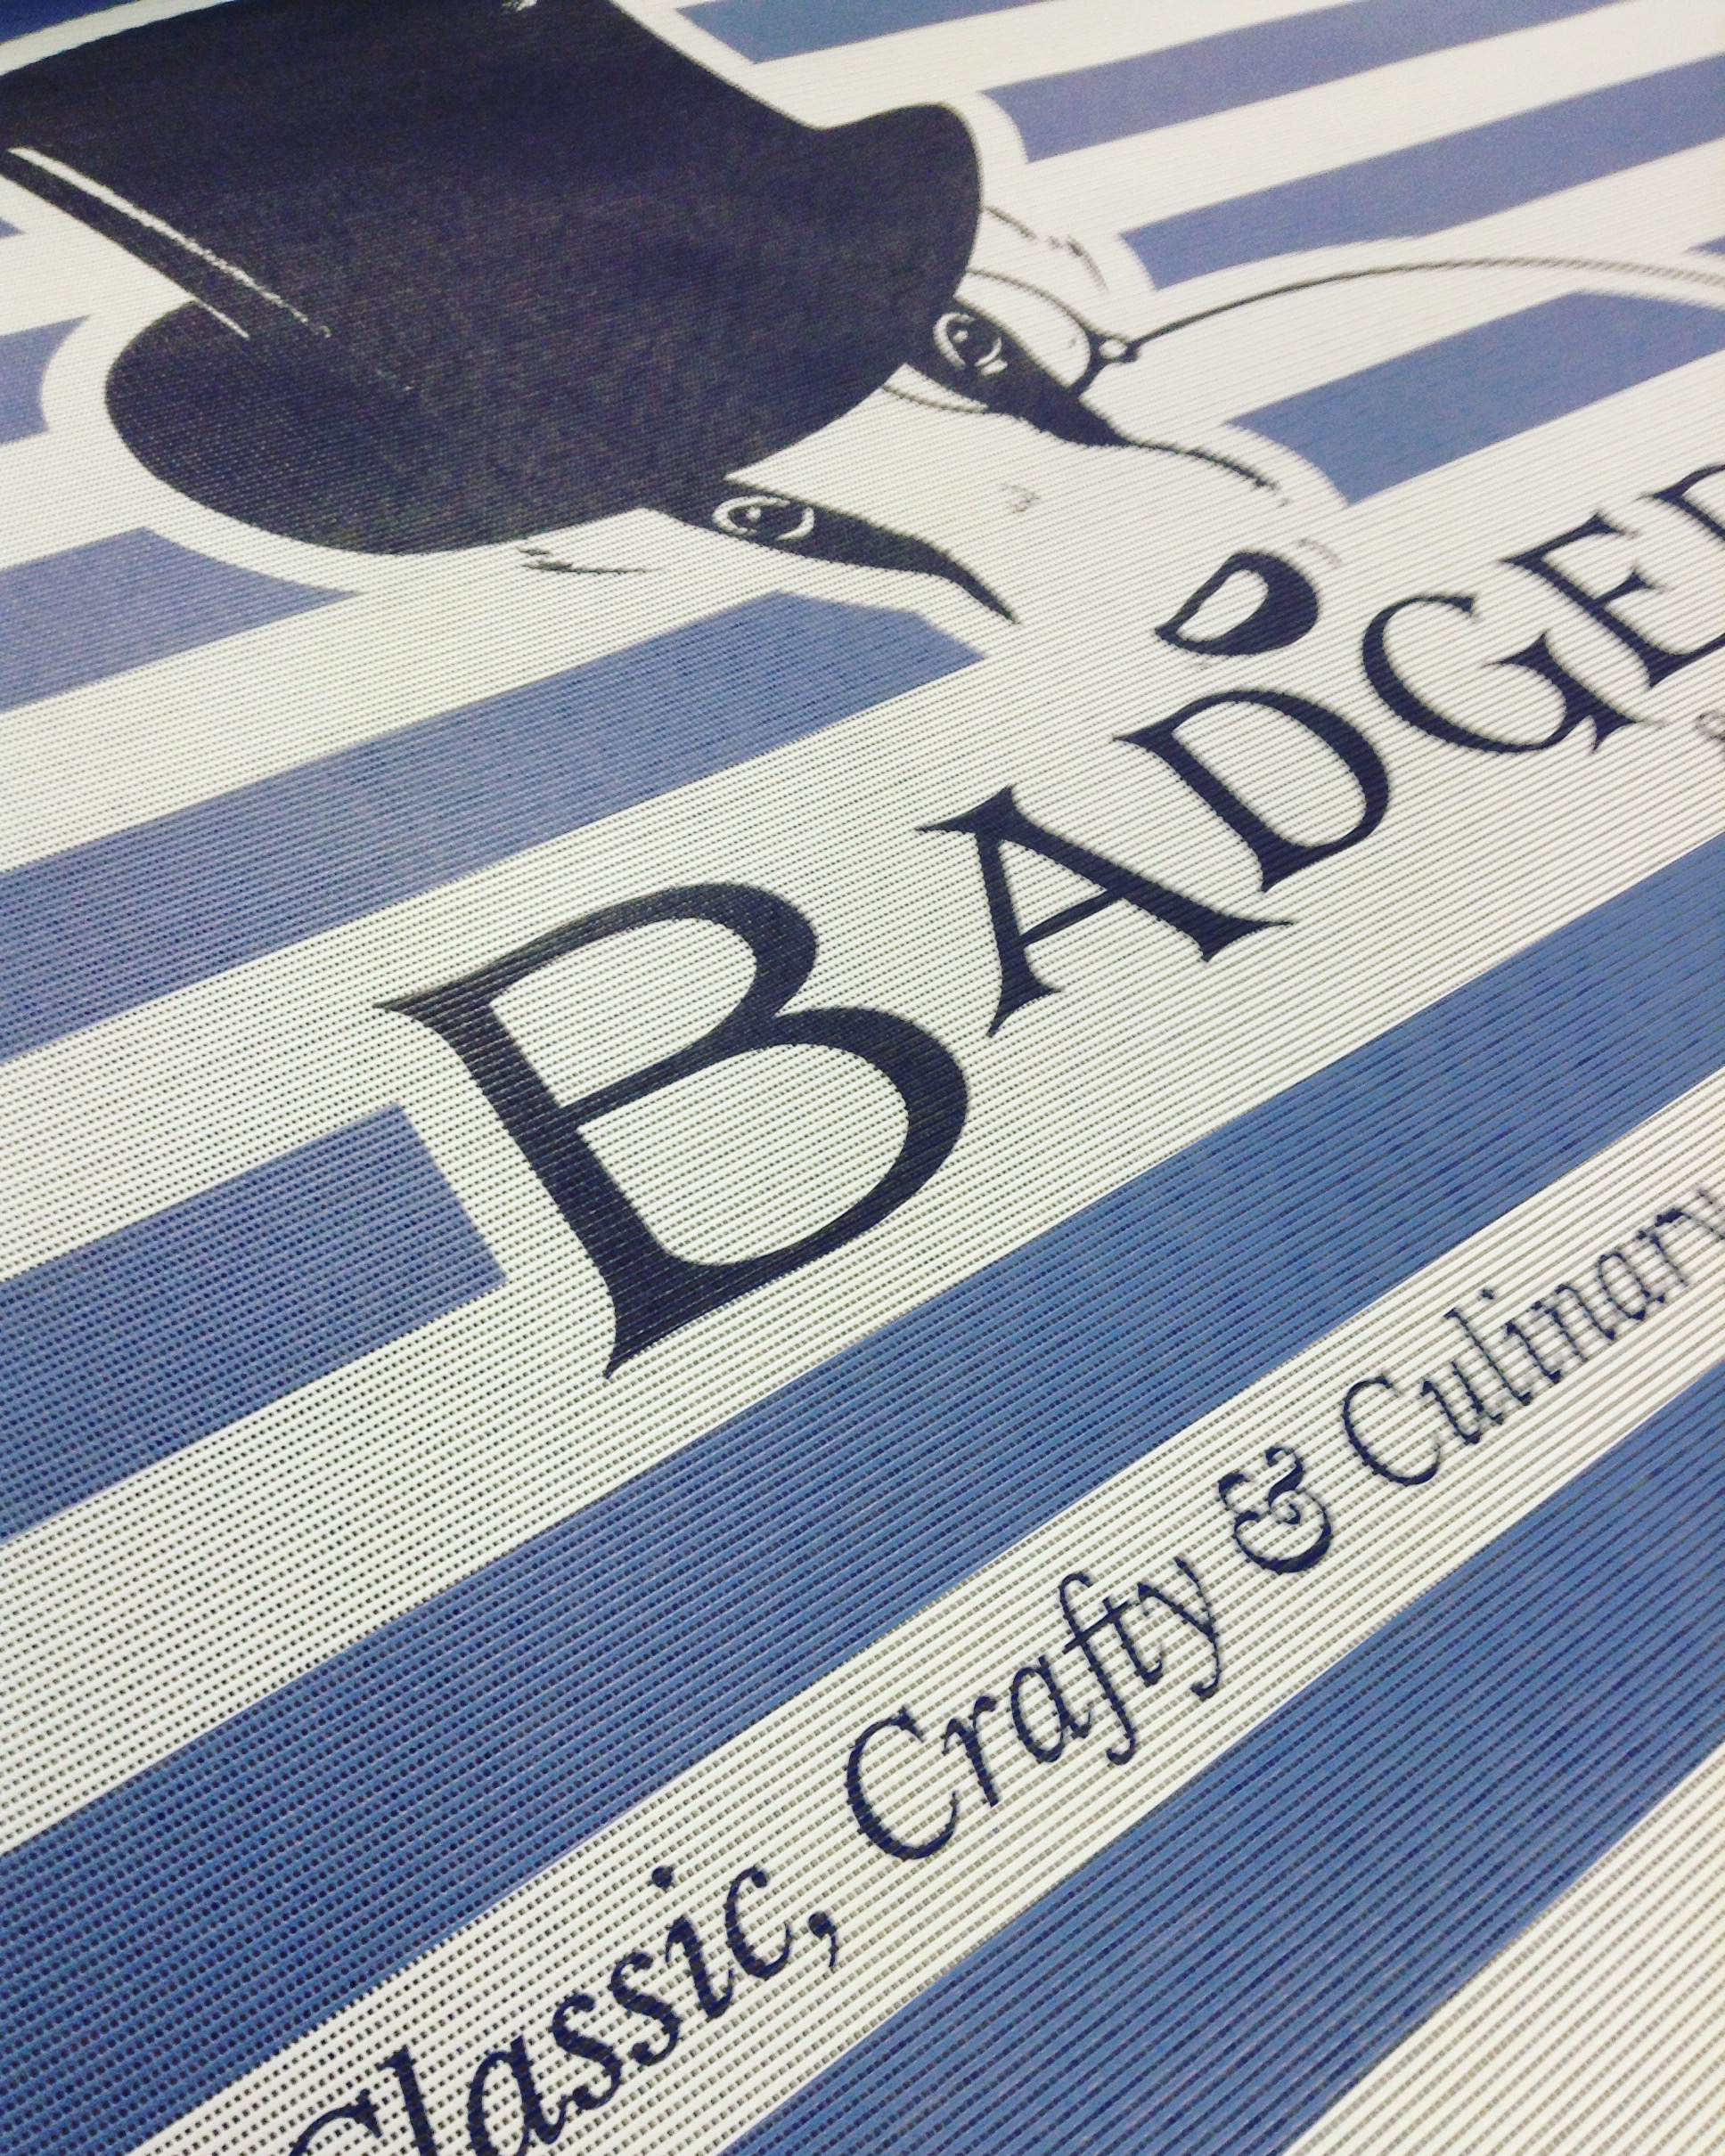 Badger - PVC Mesh Banners